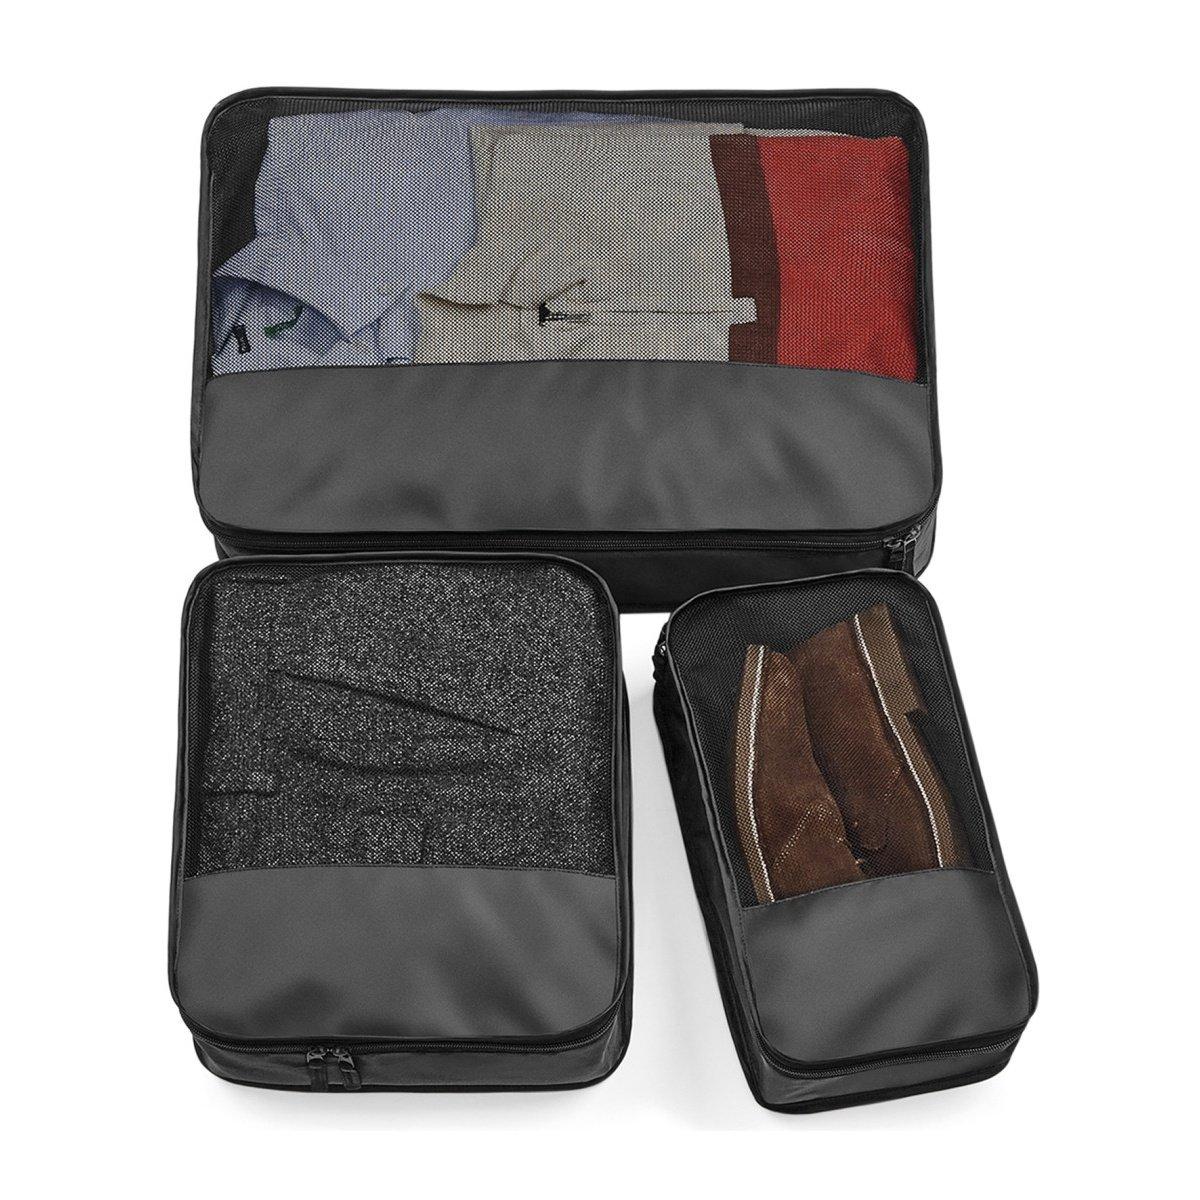 Bagbase Reise Pack Hilfe Set (2 StückPackung)  